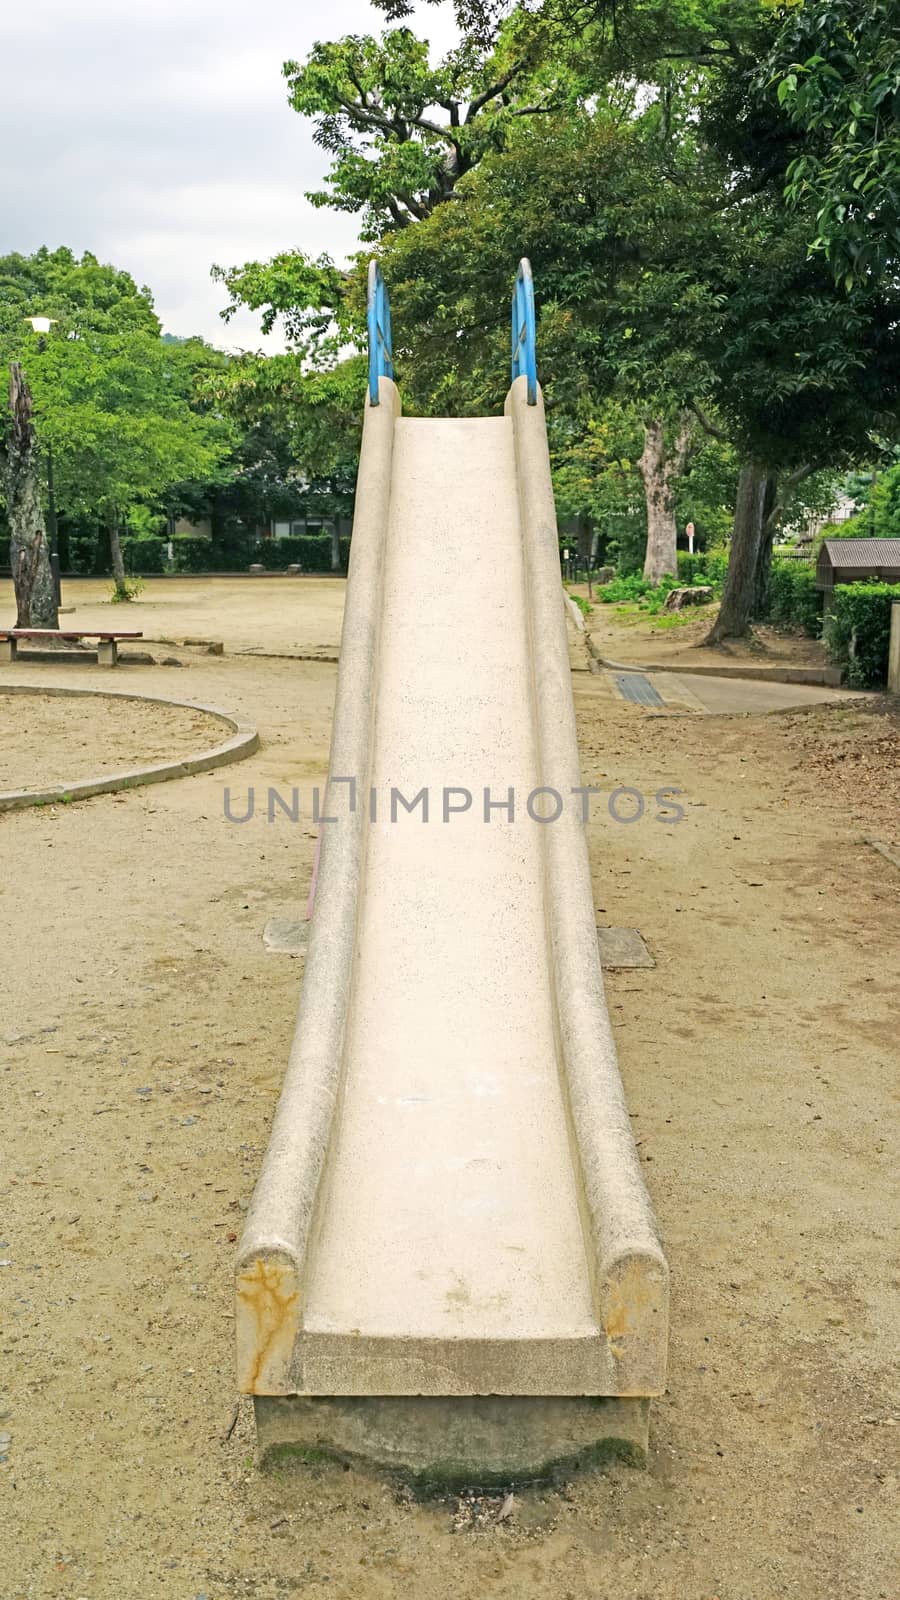 Retro children slide equipment in Japan outdoor playround by cougarsan